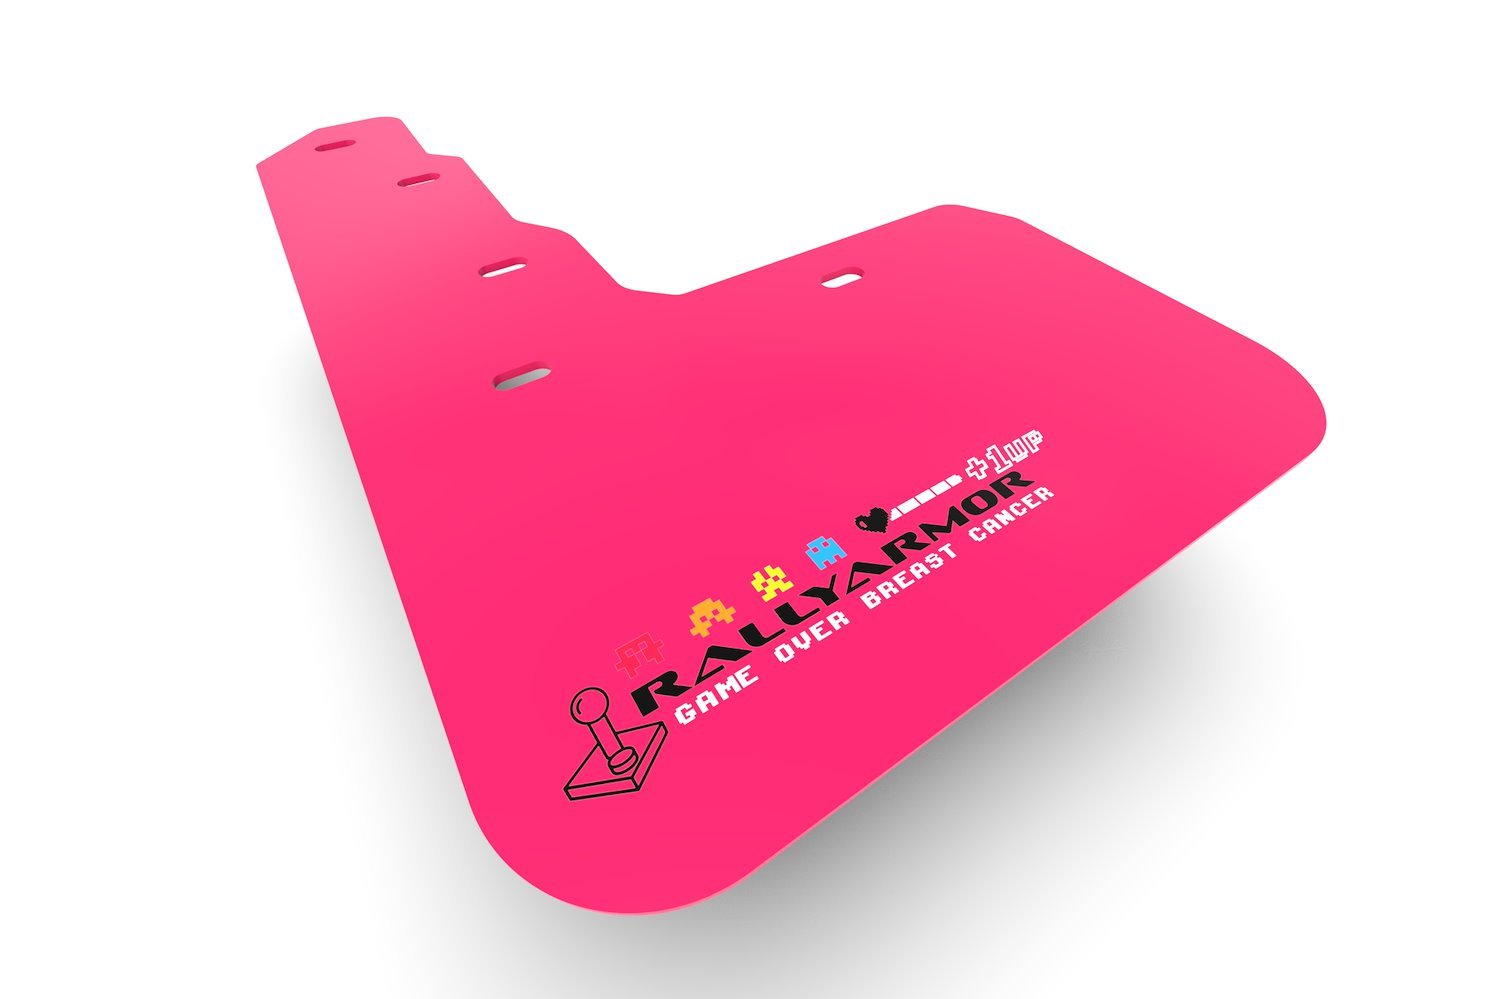 MF2-BCE22-PK/BLK Mud Flap Kit with BCE Logo for 1993-2001 Subaru Impreza - Pink Mud Flap/Breast Cancer Logo